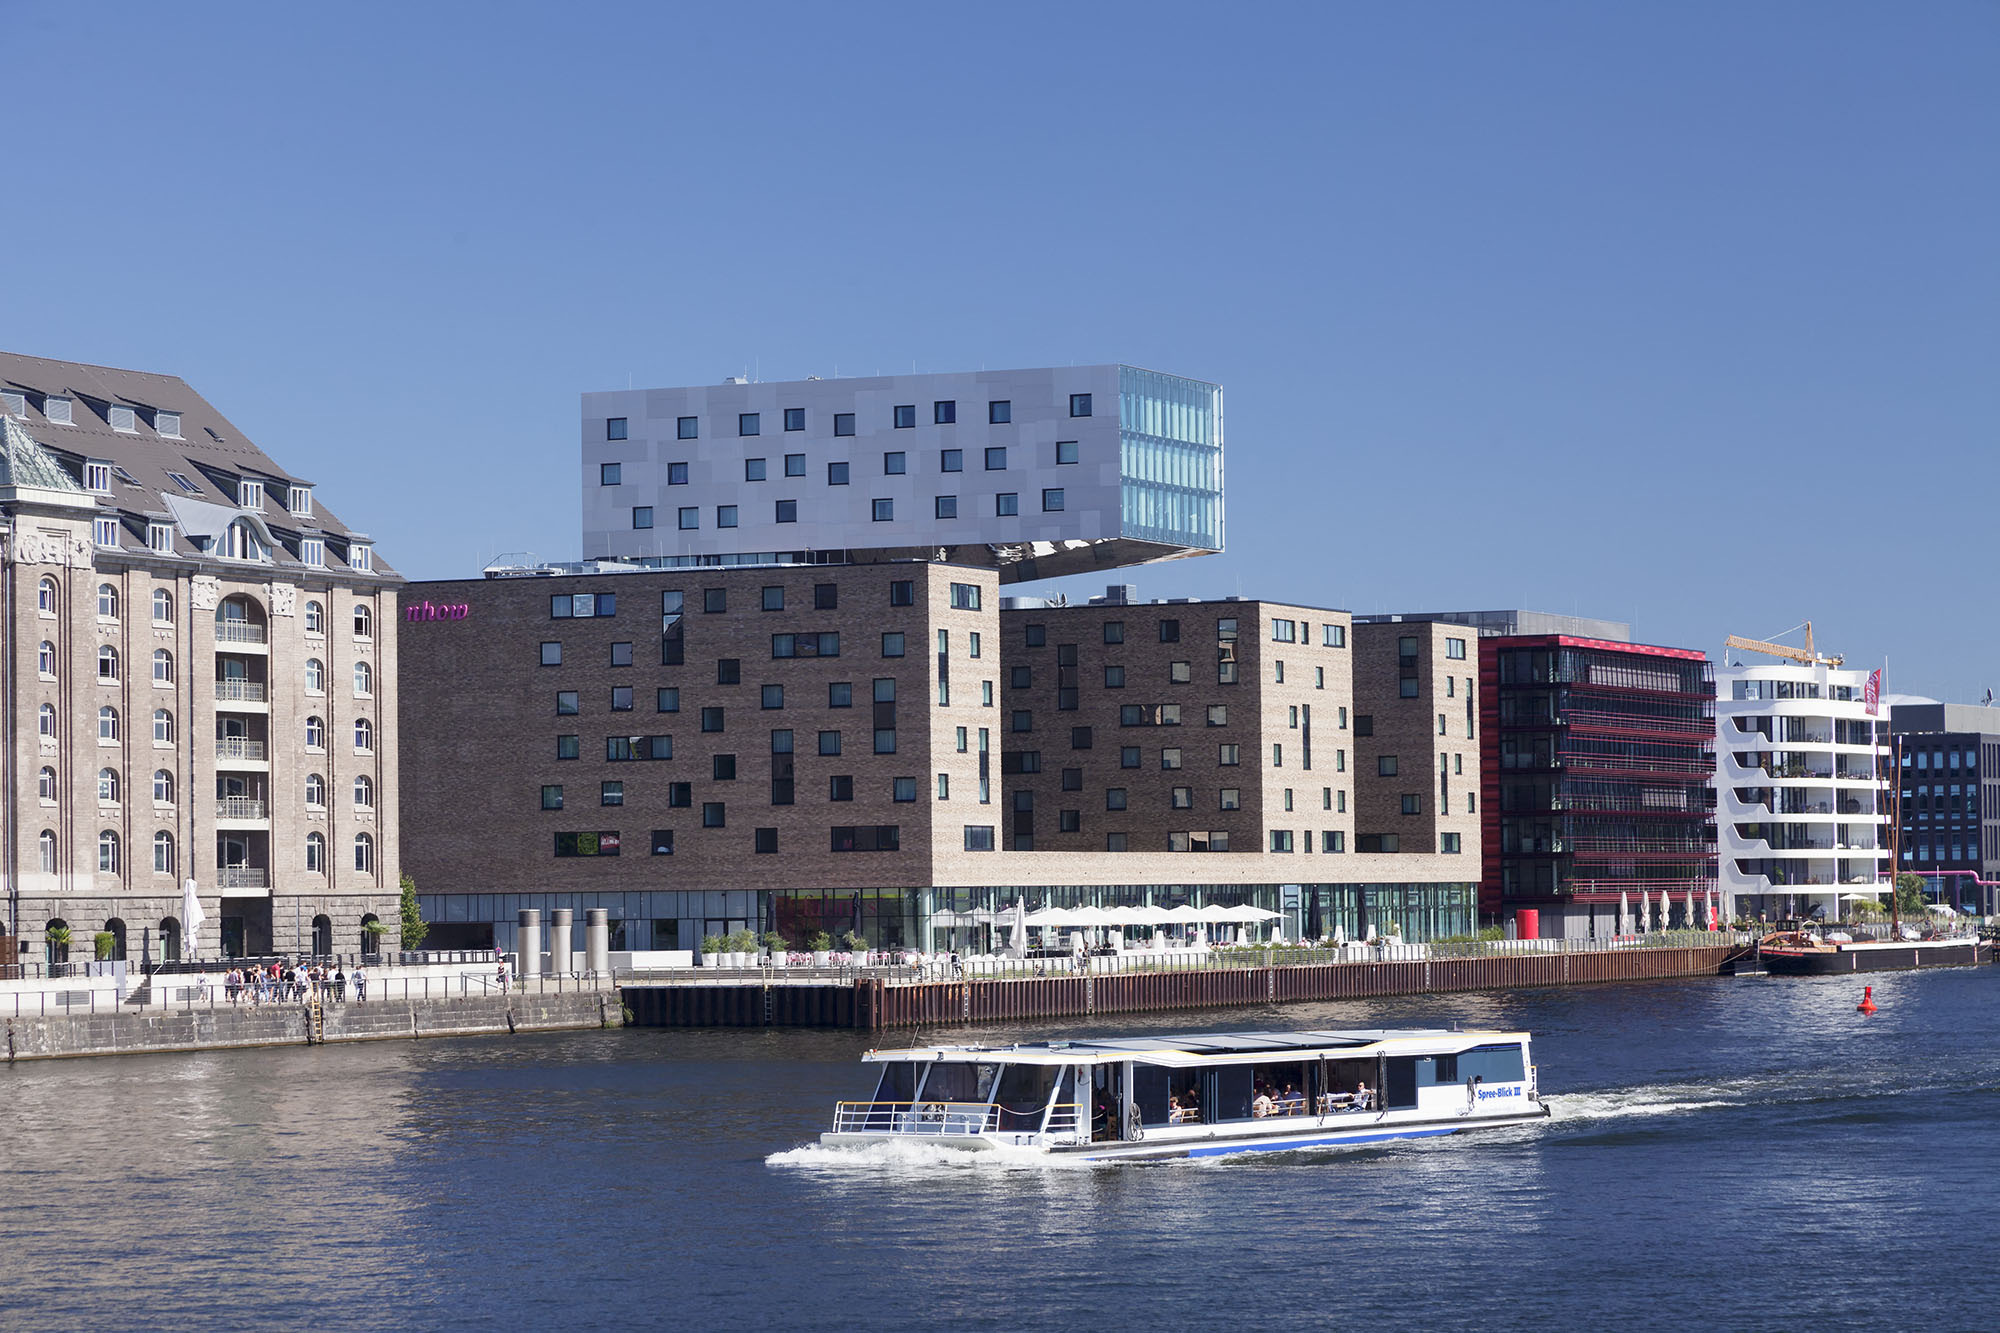 Modern Architecture at Spree River, excursion boat, Osthafen Port, Friedrichshain, Berlin, Germany